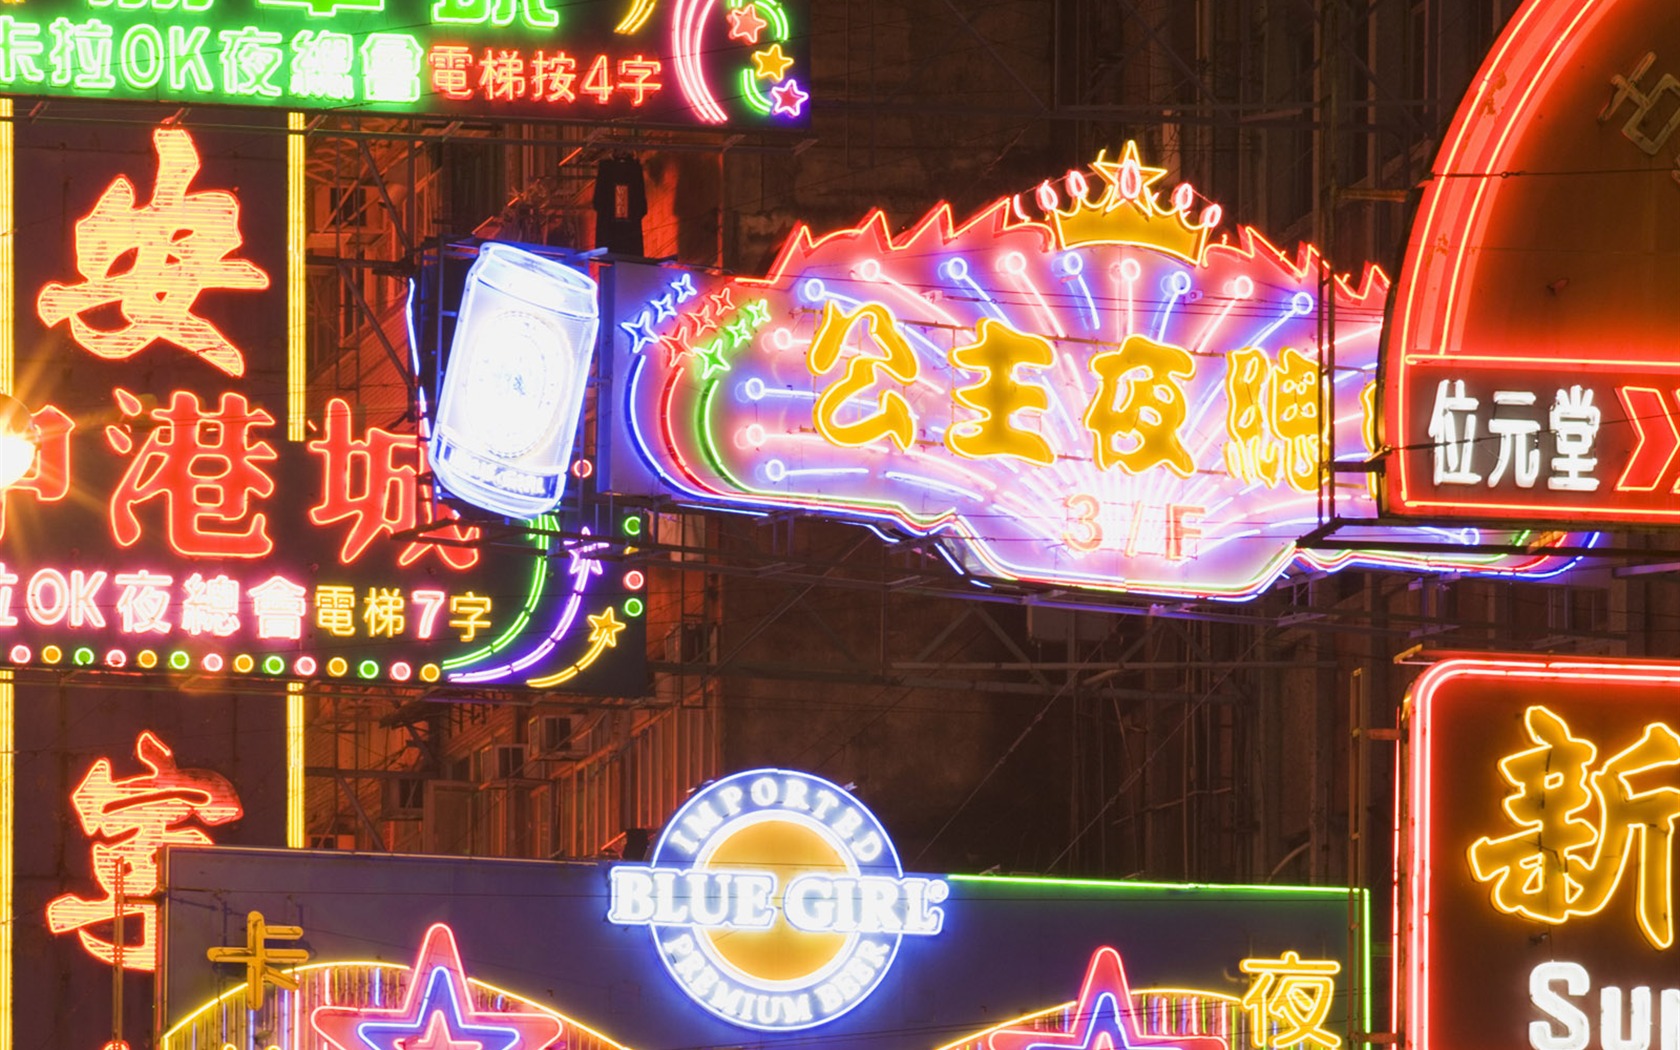 Vistazo de fondos de pantalla urbanas de China #10 - 1680x1050